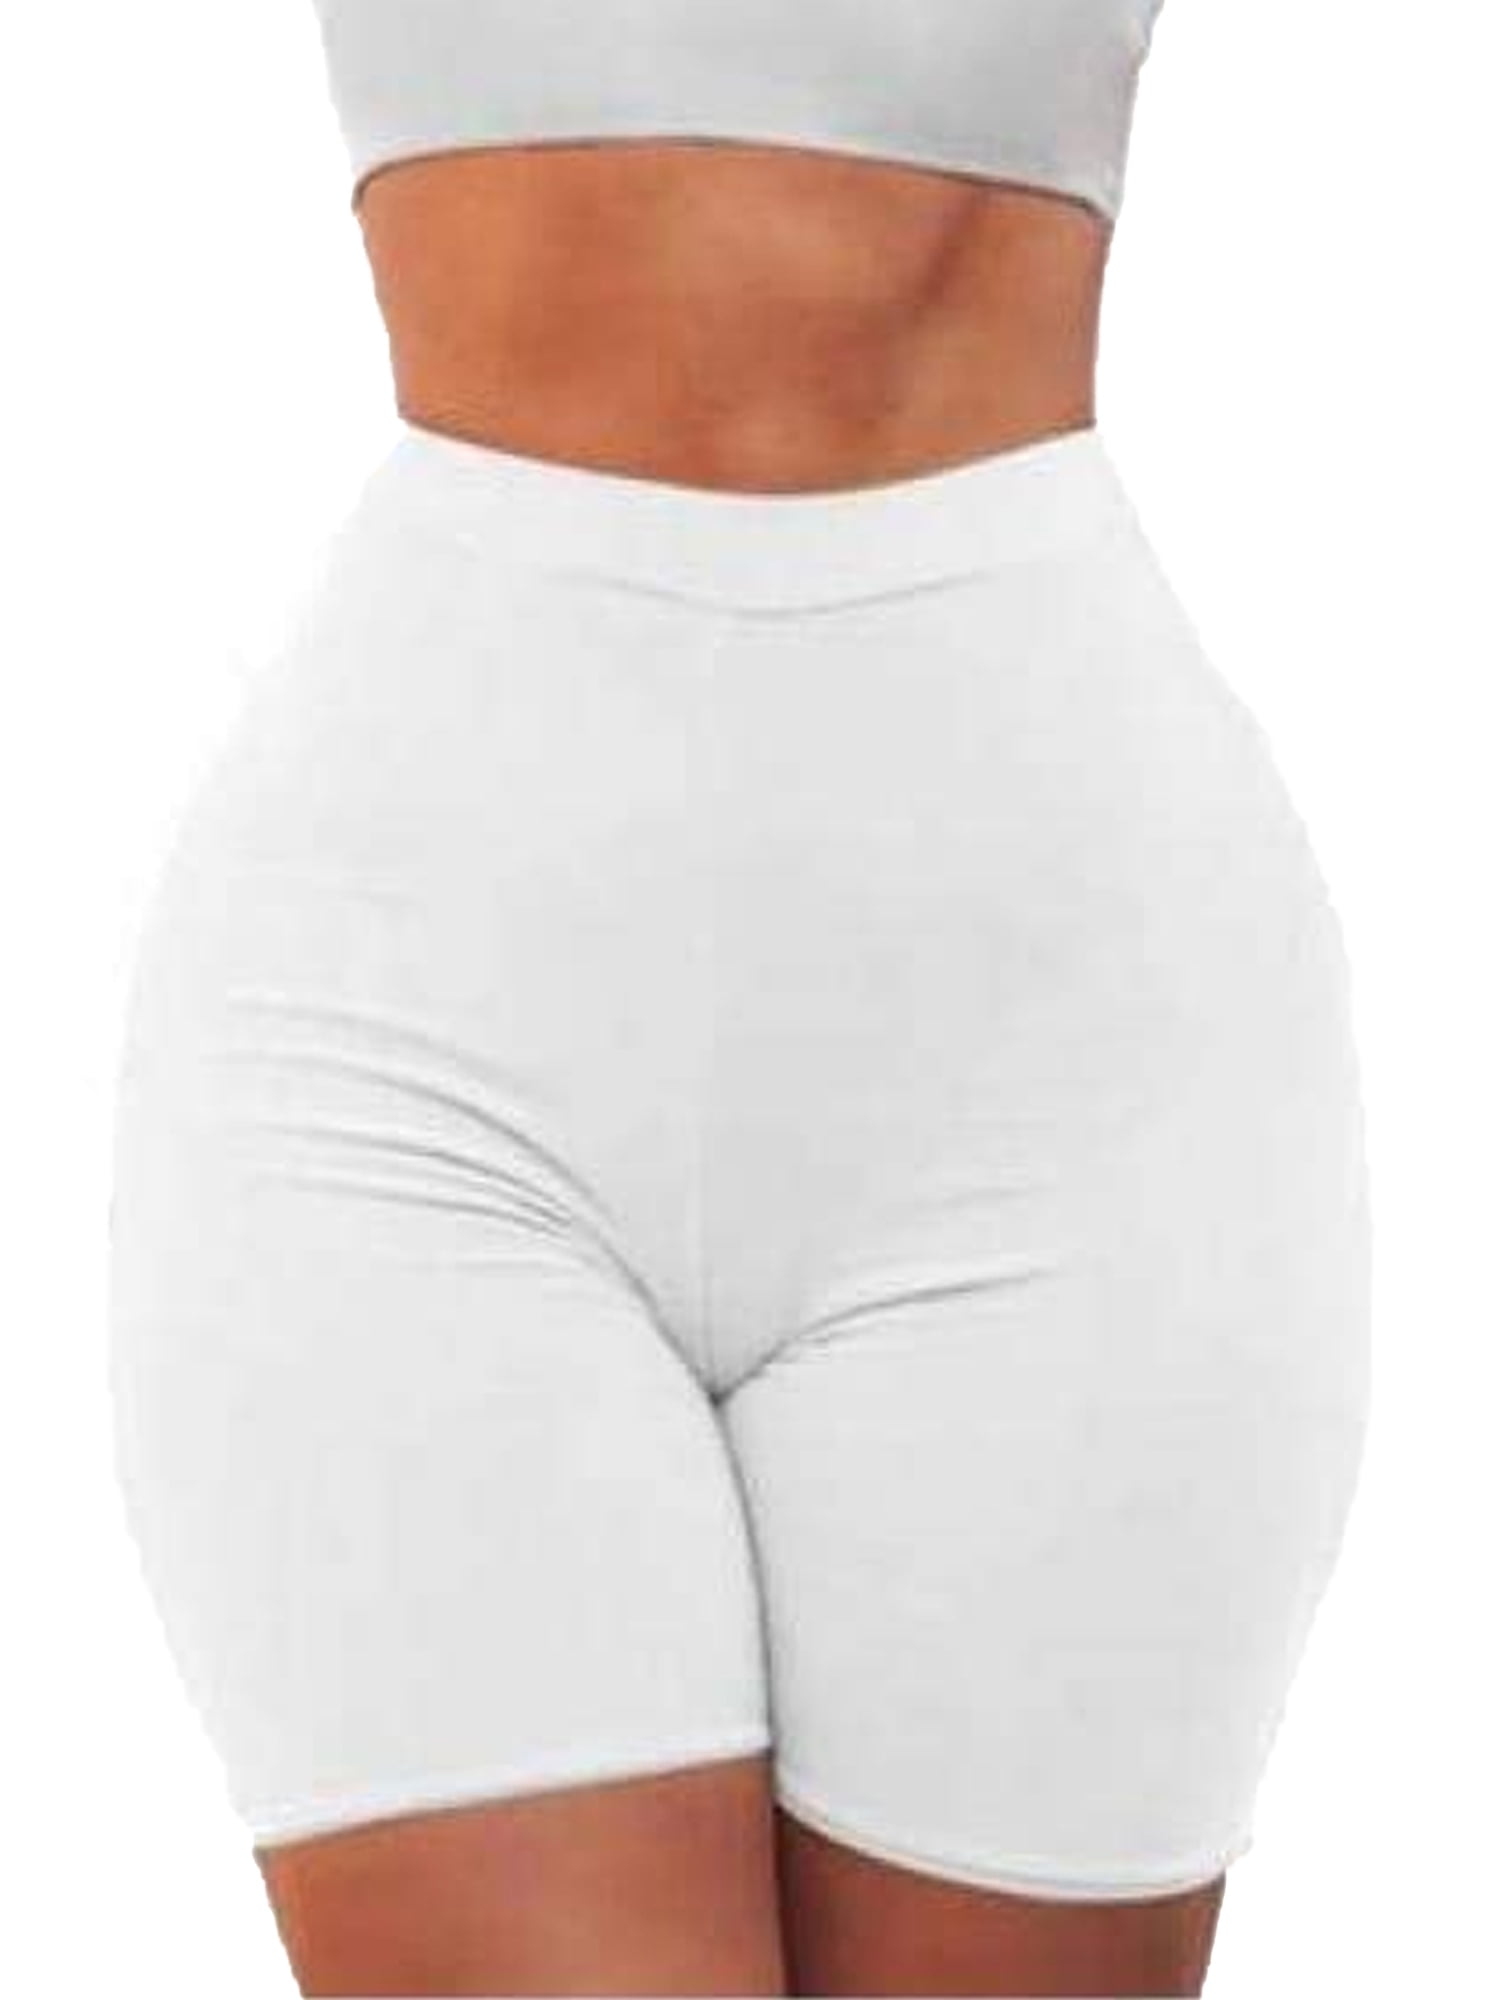 New Ladies Ribbed Stretchy Activewear Dance Gym Yoga Cycling Shorts Tight Pants